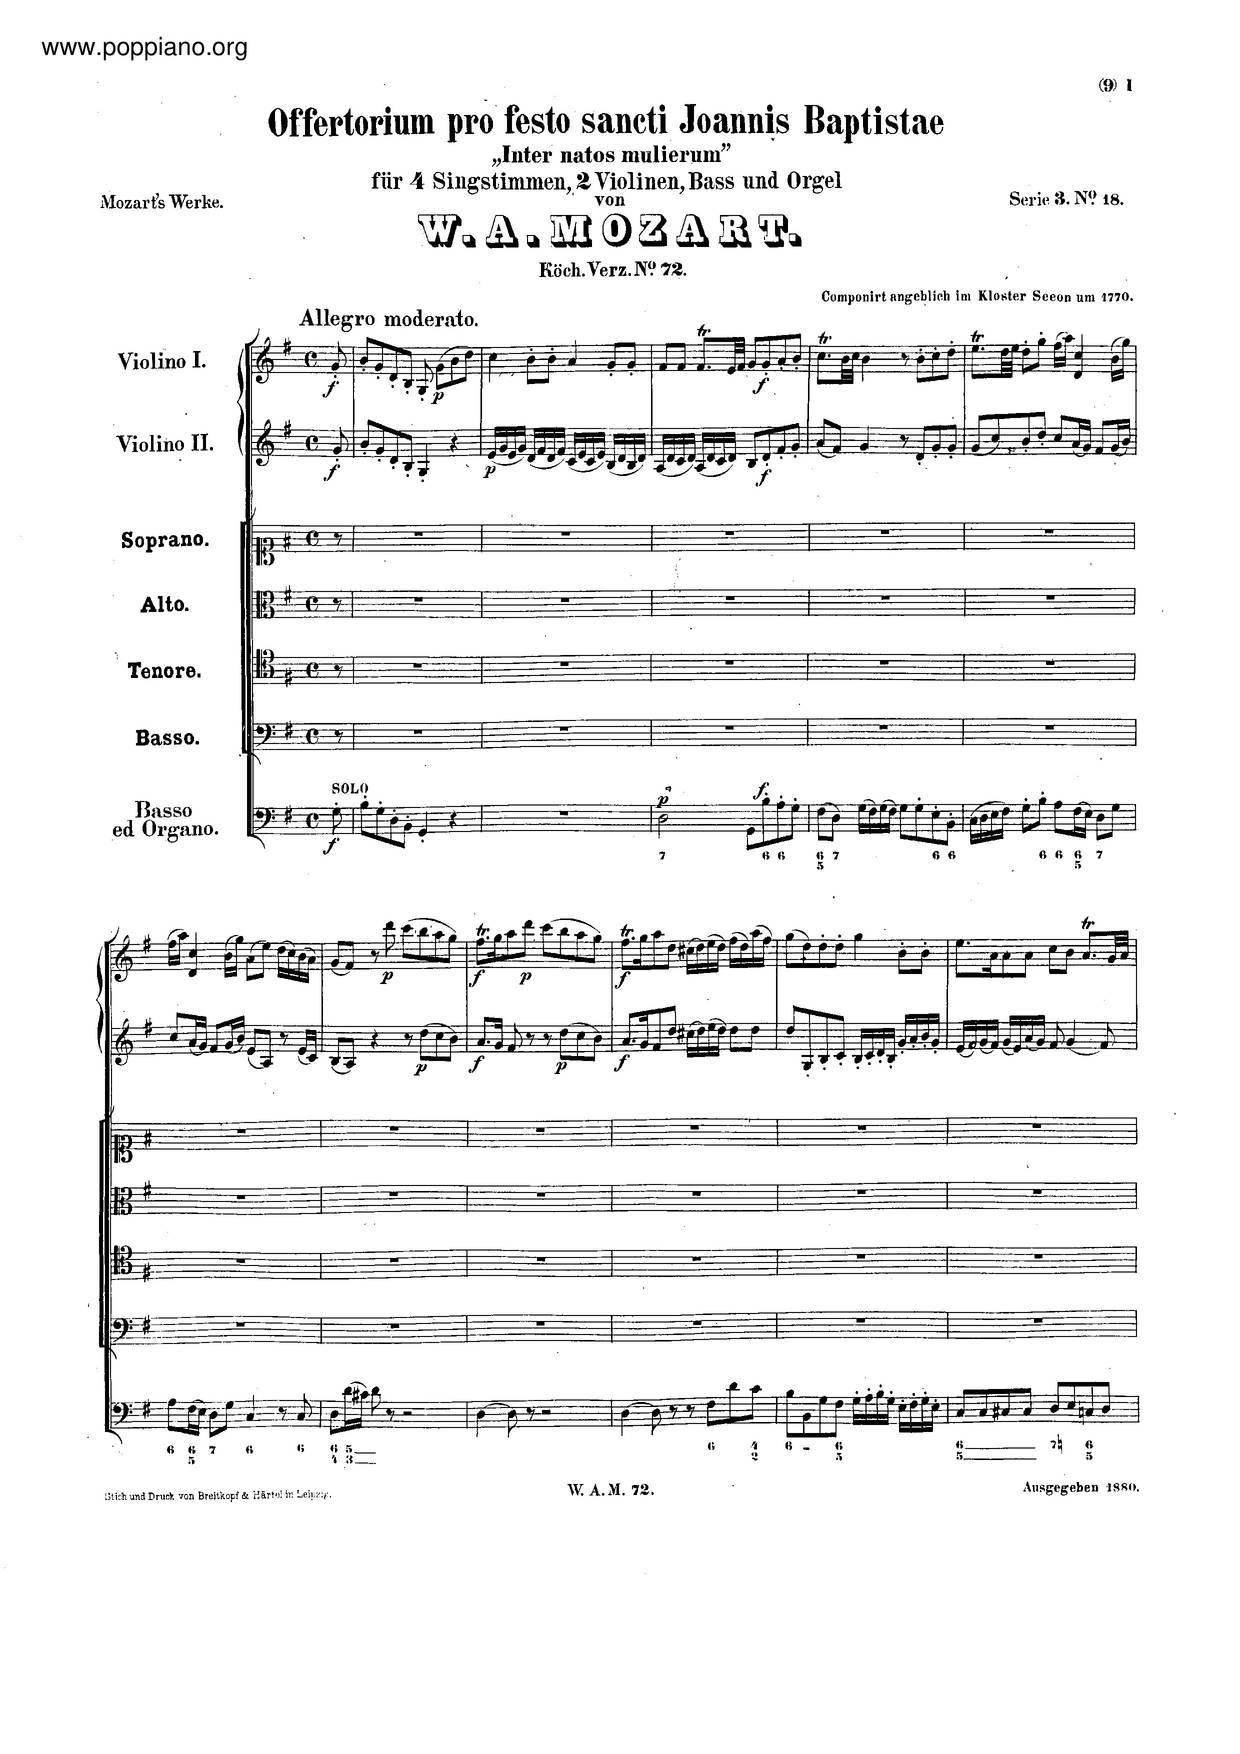 Inter Natos Mulierum, K. 72/74Fピアノ譜